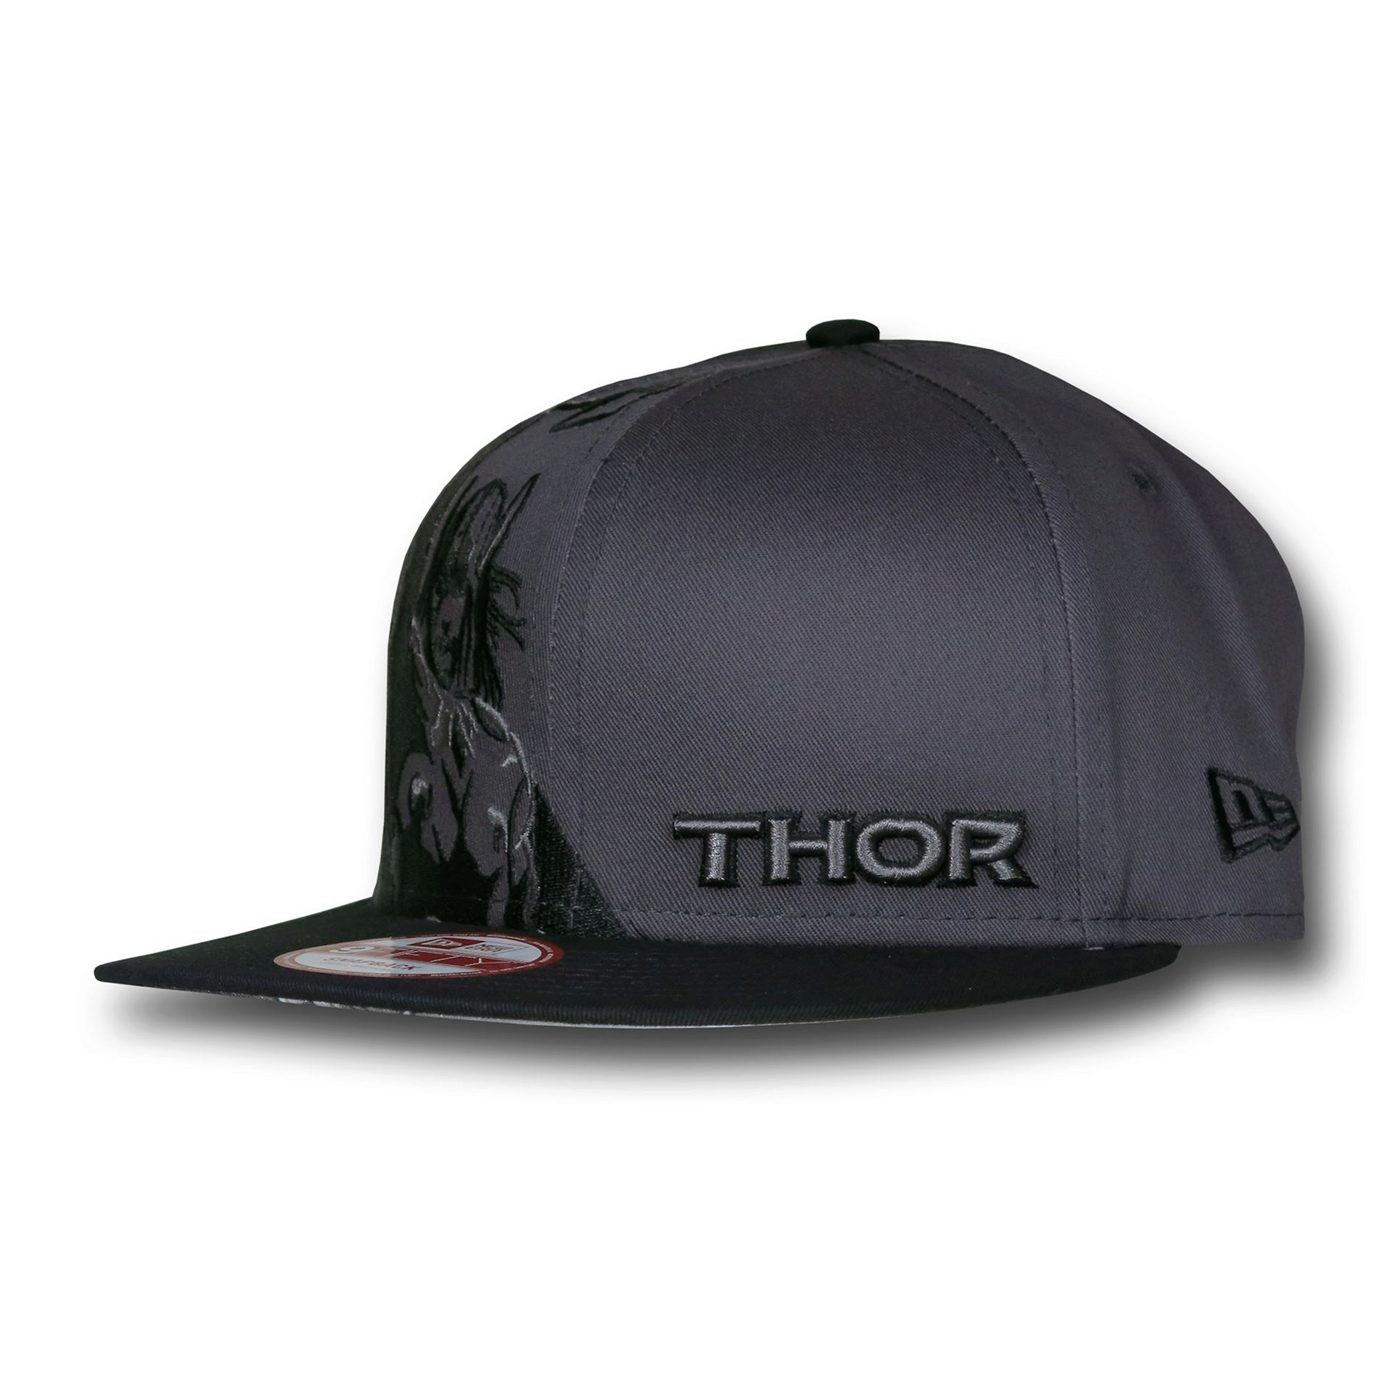 Thor Image Grey Black 9Fifty Snapback Cap